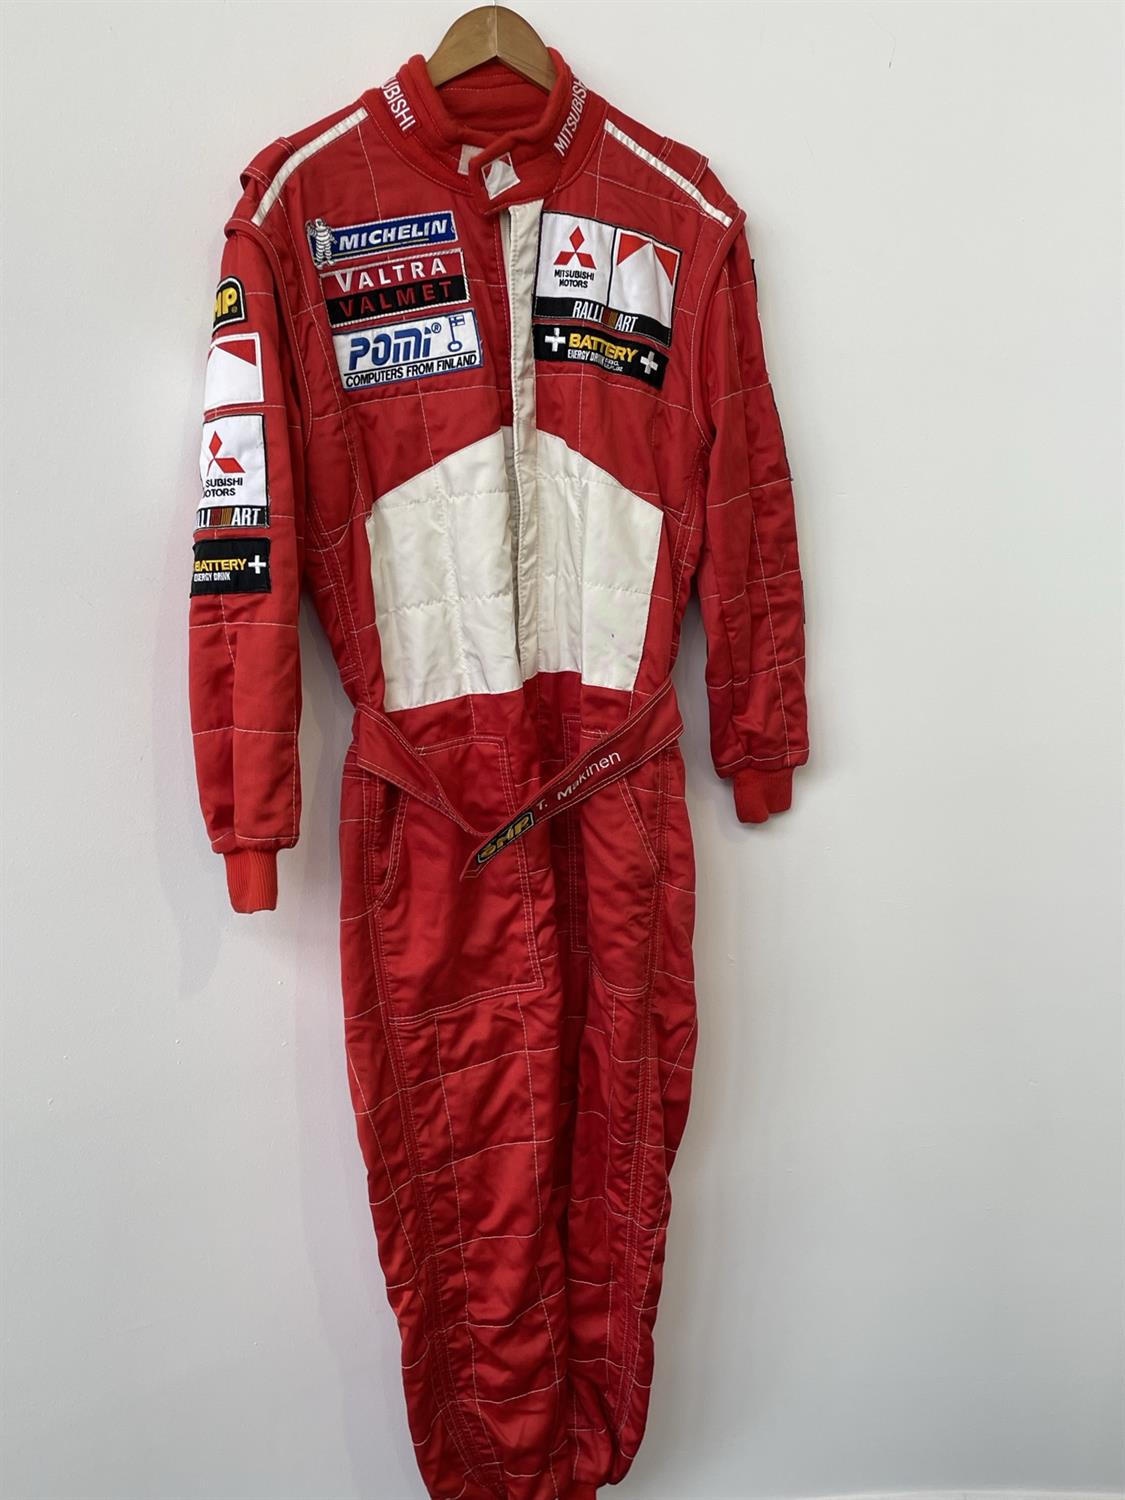 Tommi Makinen's Mitsubishi Race Suit - Image 2 of 6